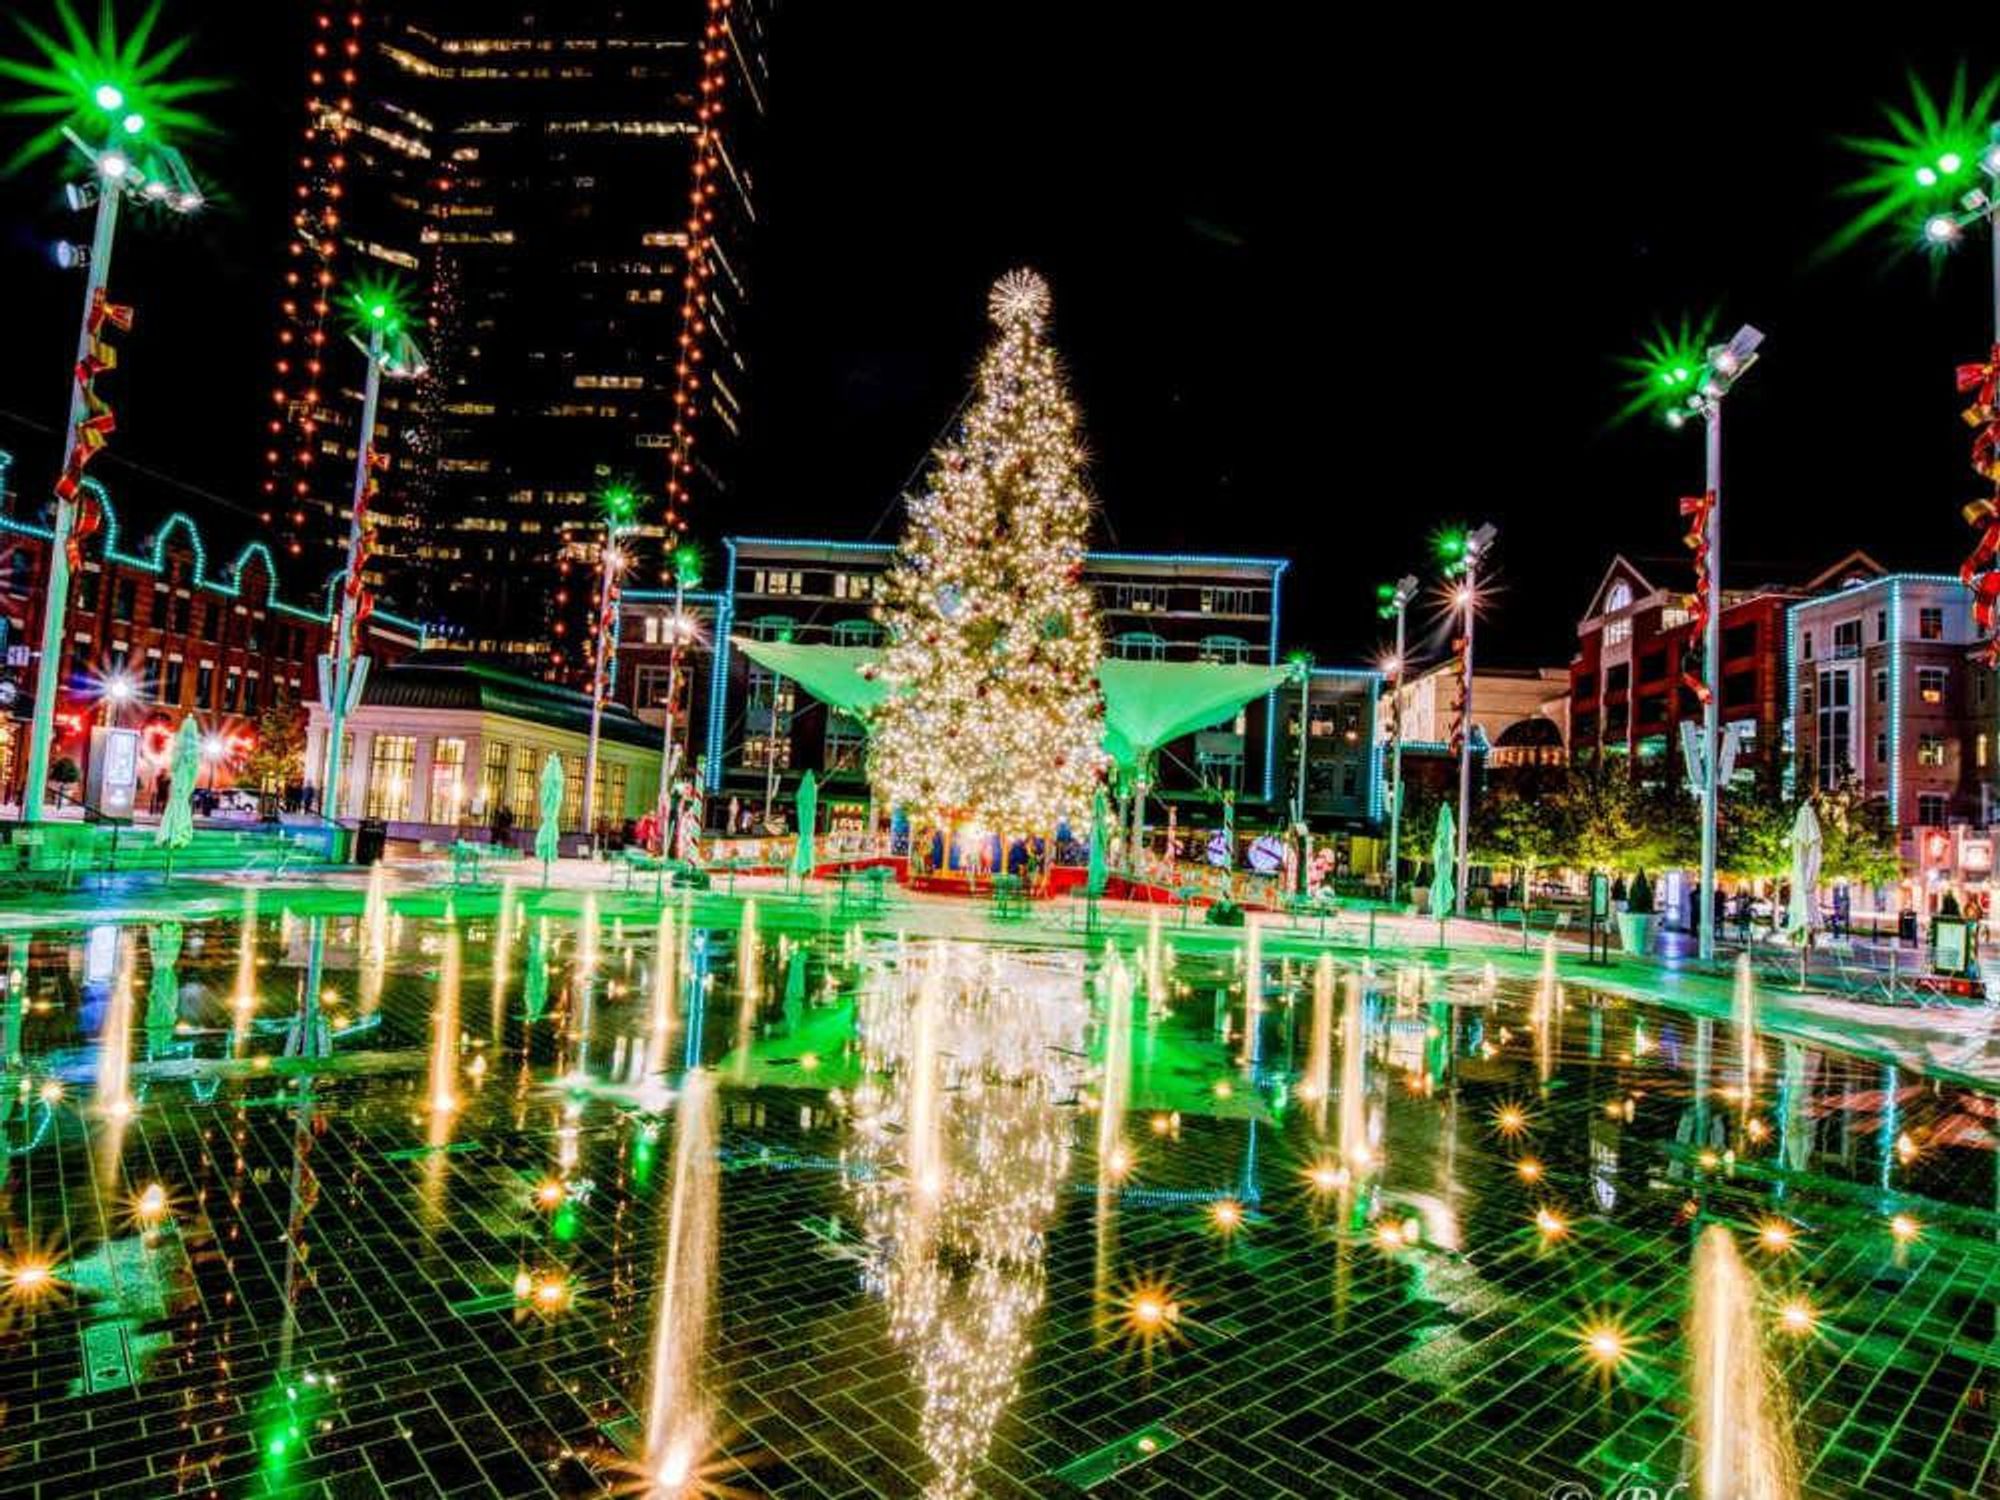 Sundance Square Plaza Christmas lights